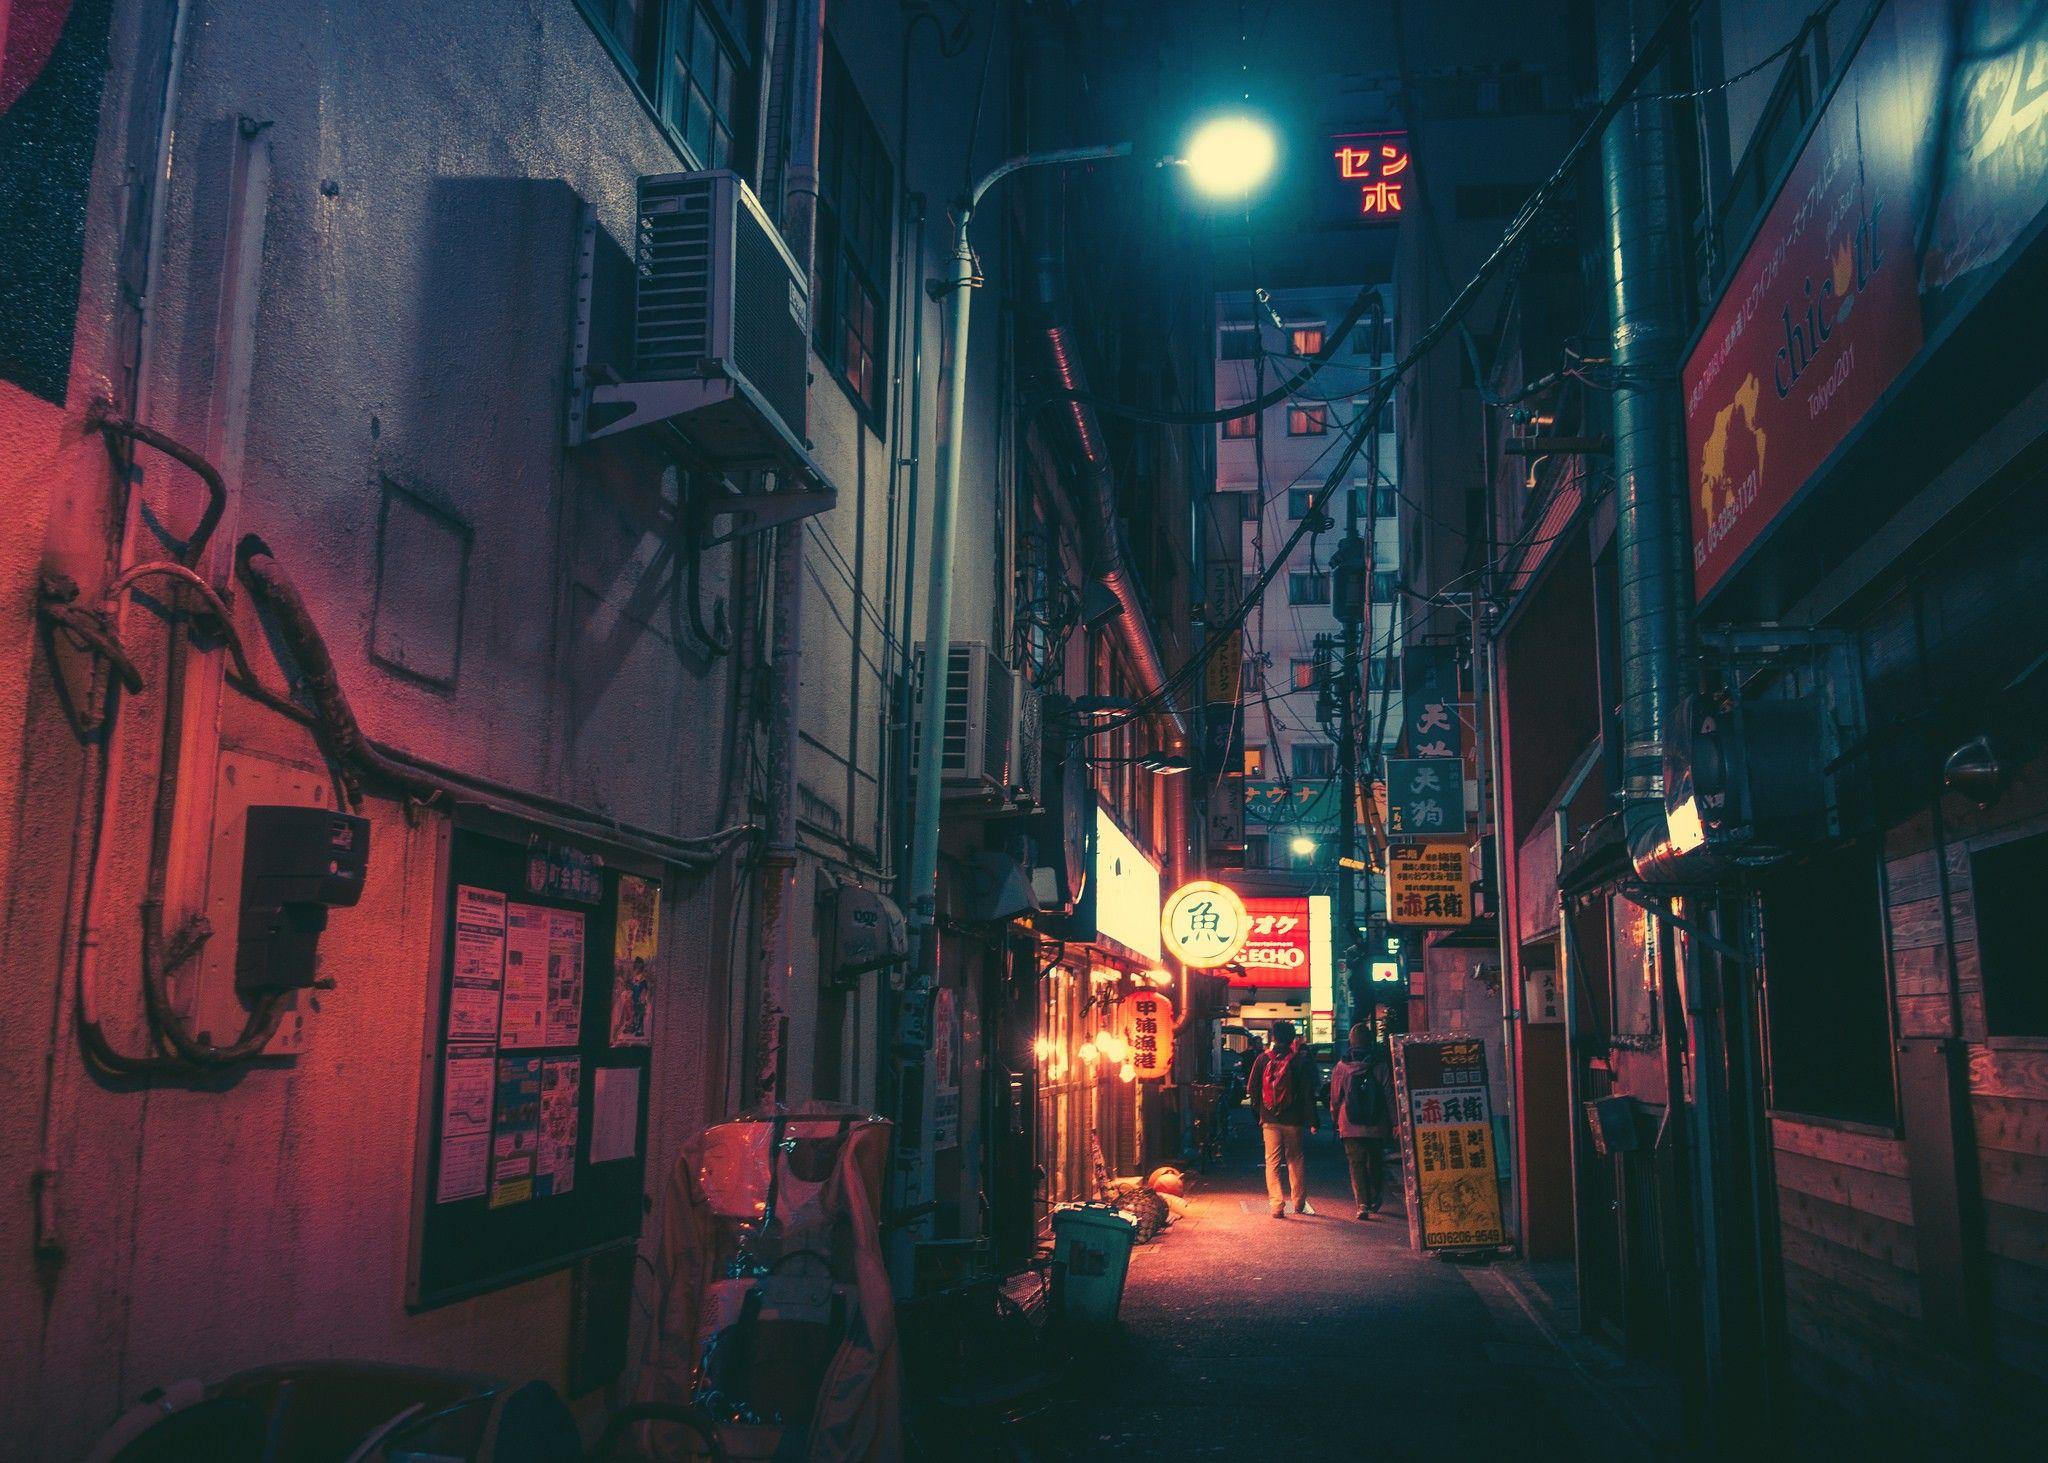 General 2048x1463 Japan street neon. Japan street, City aesthetic, Street photography